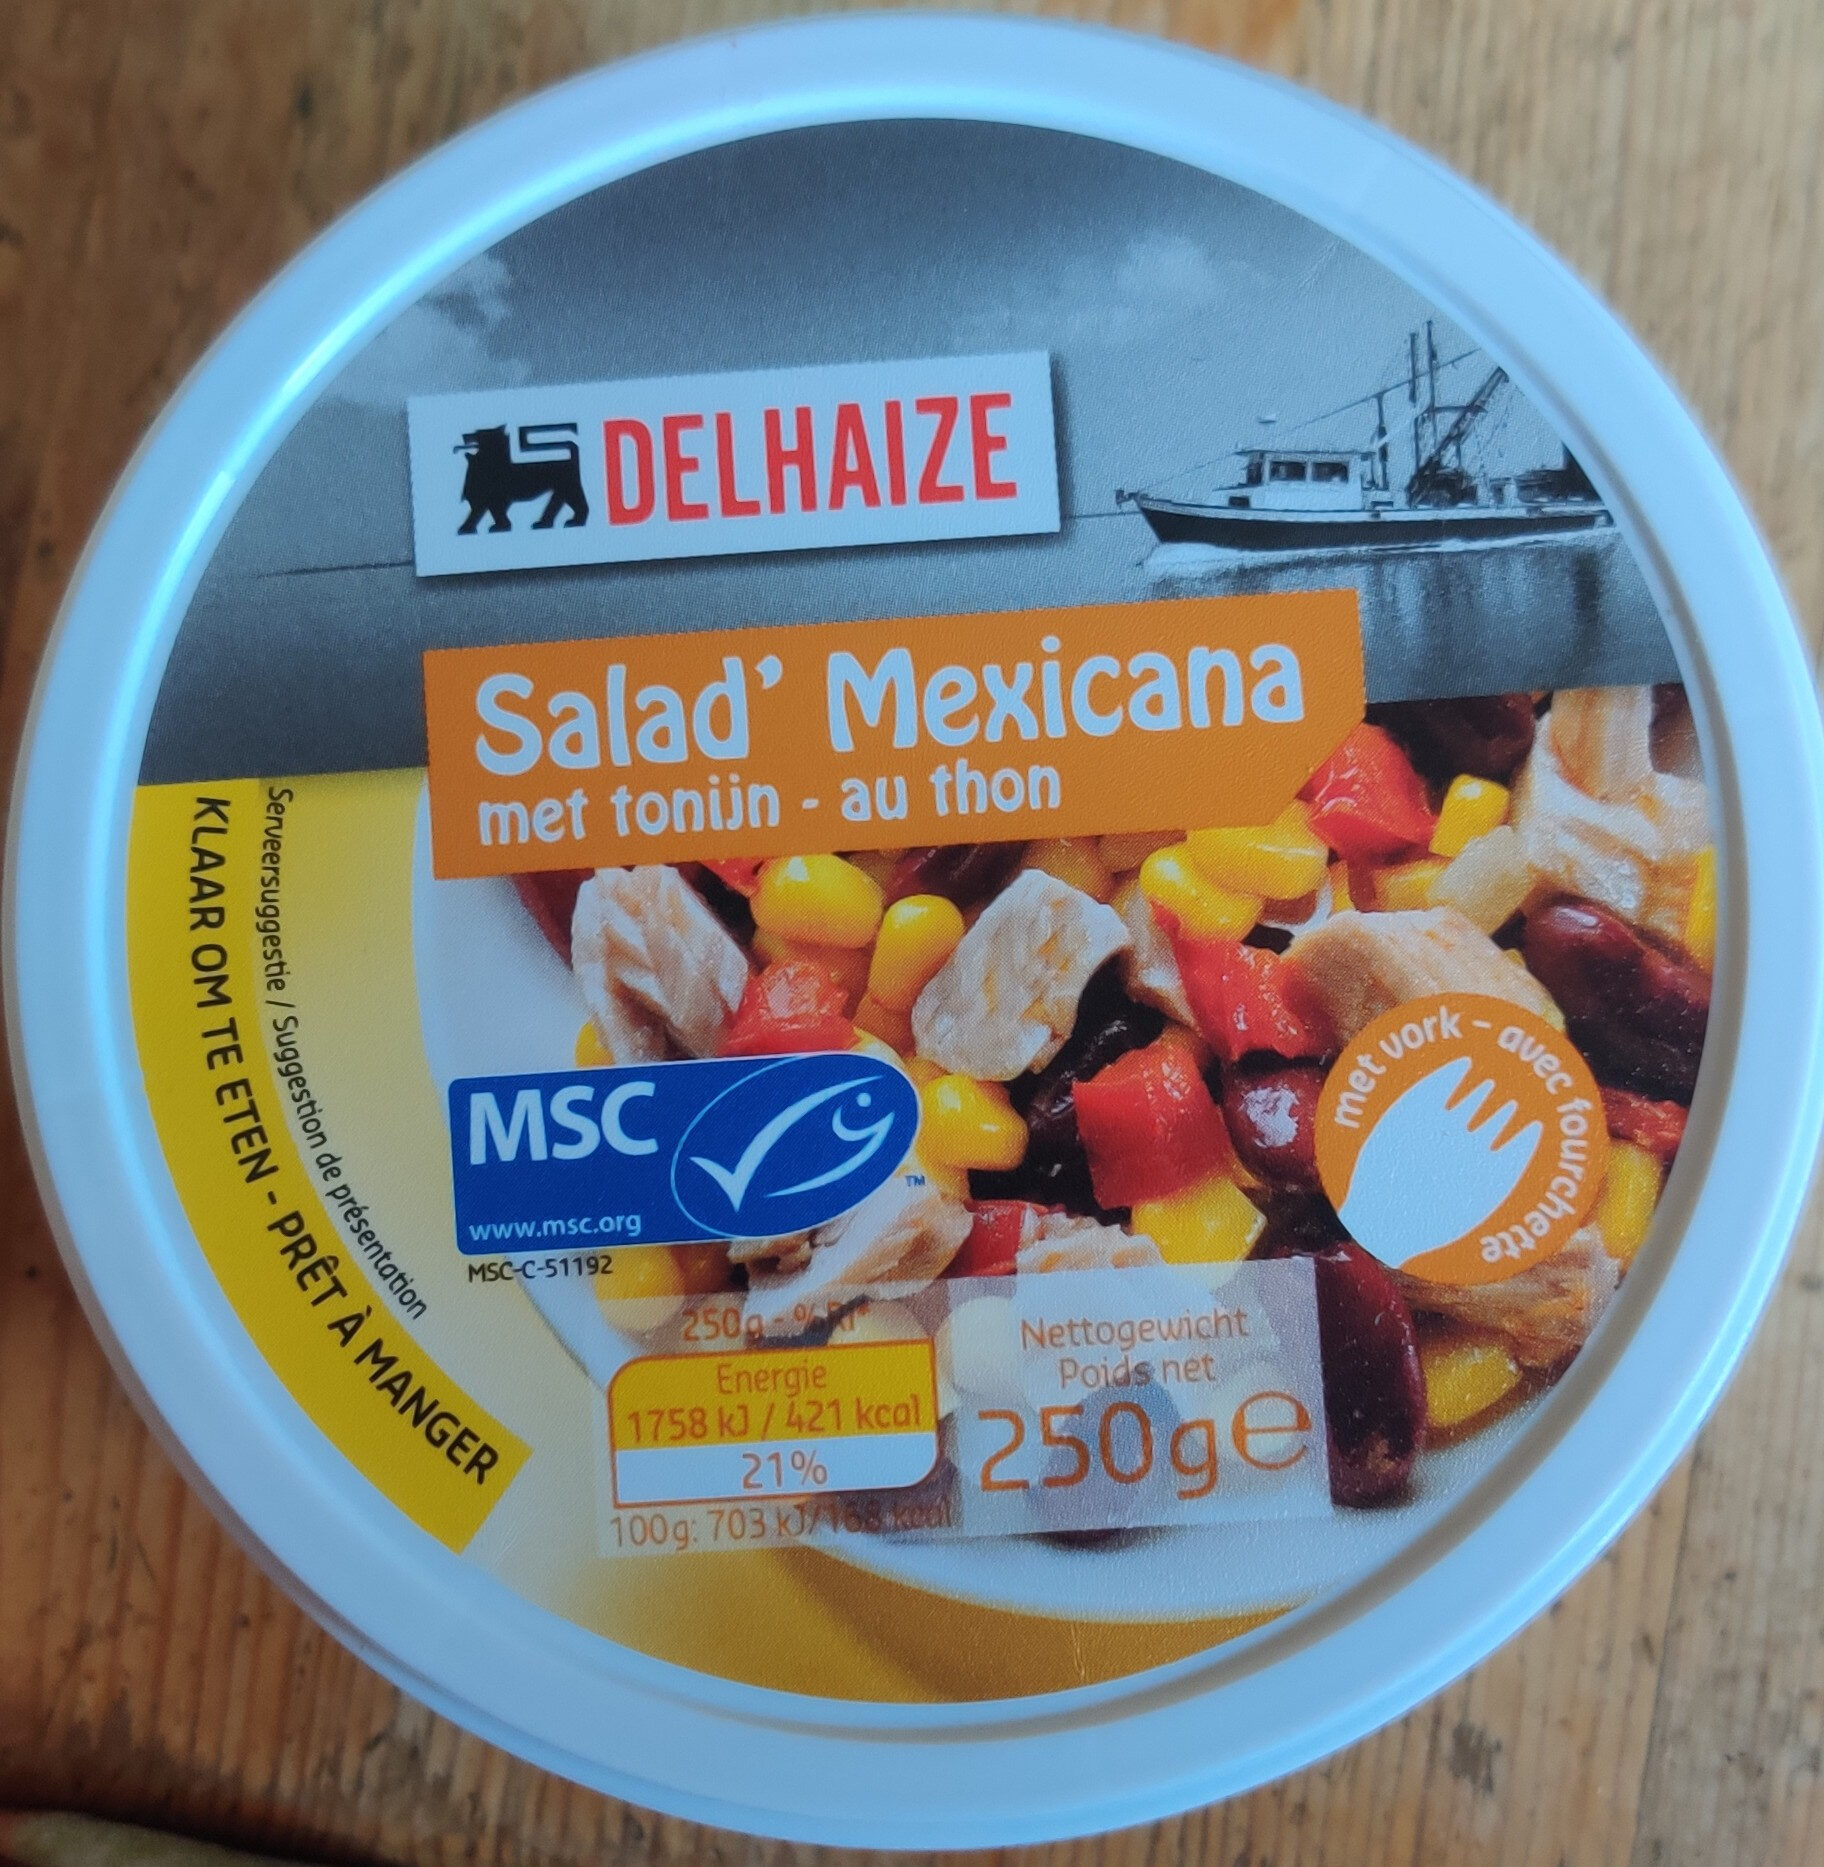 Salad' Mexicana - Product - fr